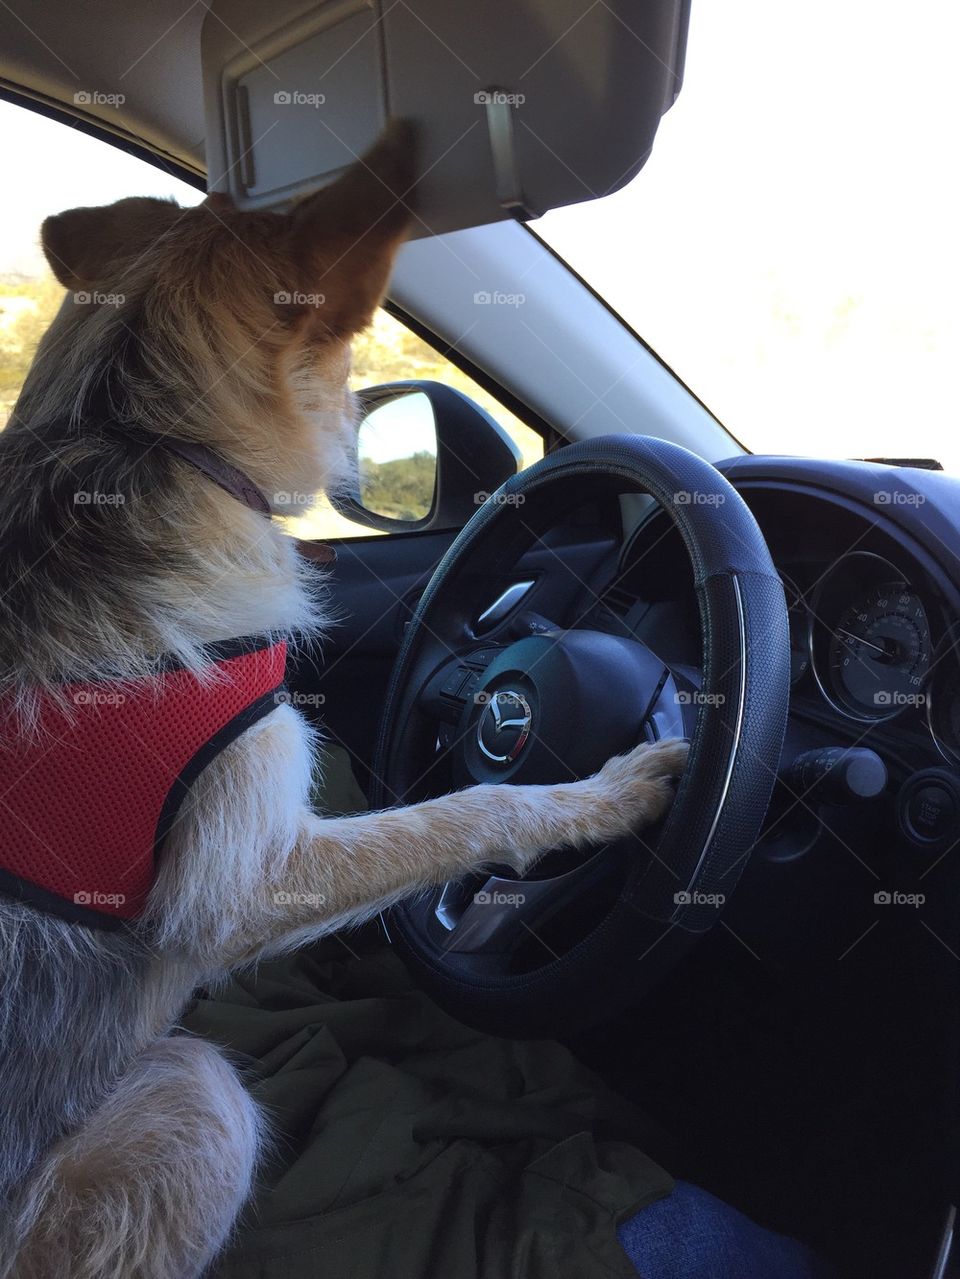 Drivers seat